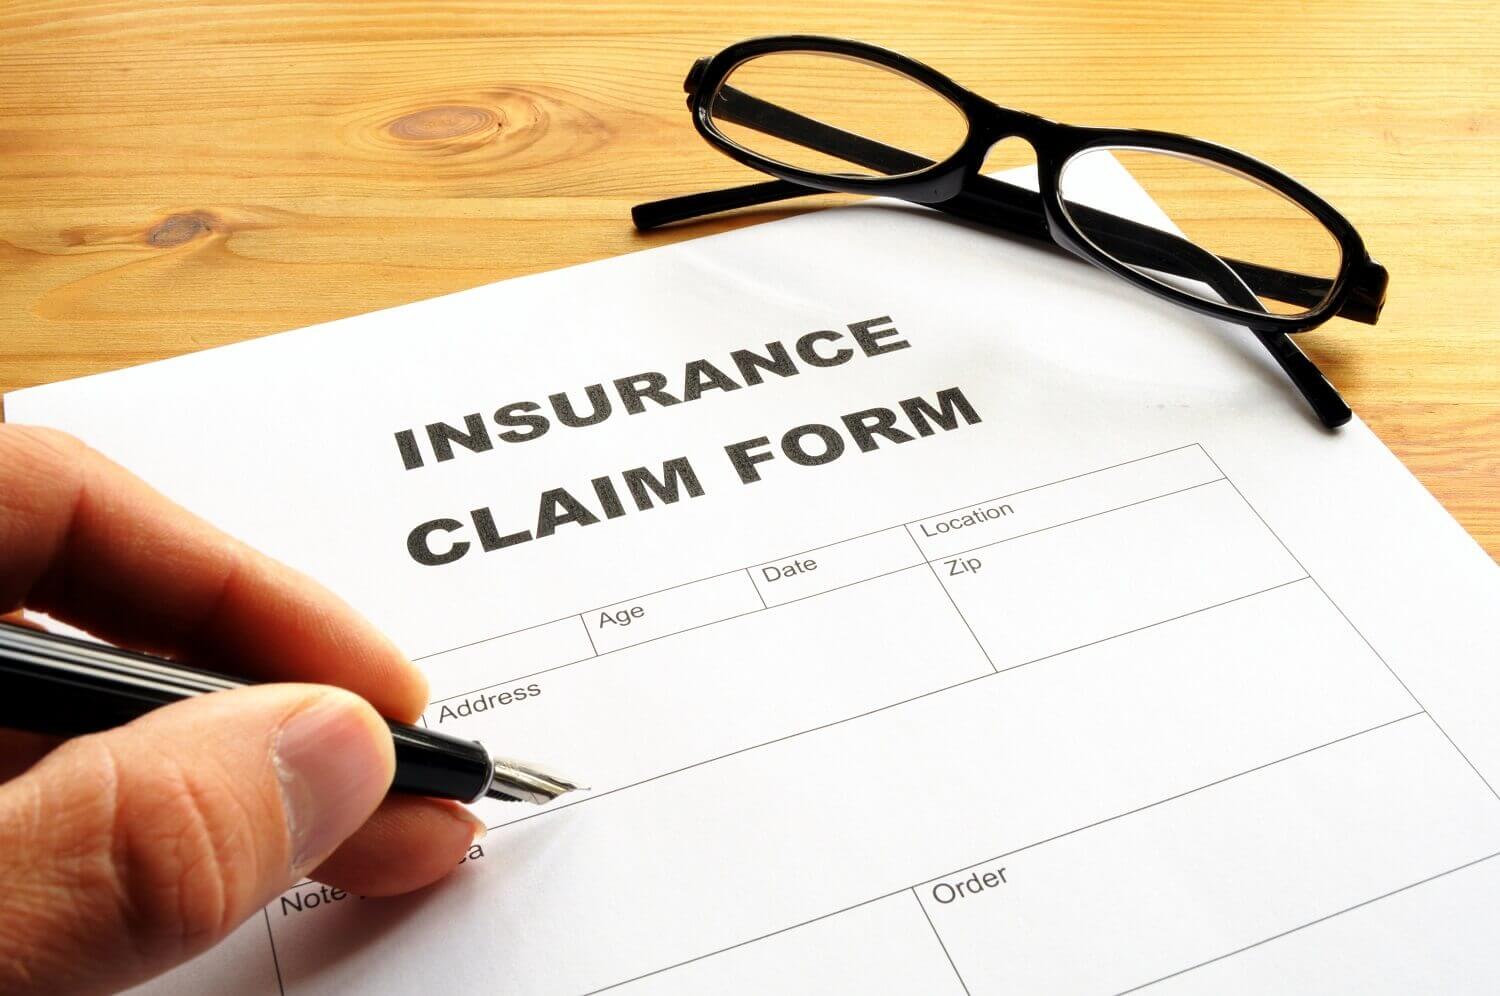 How to make a travel insurance claim?